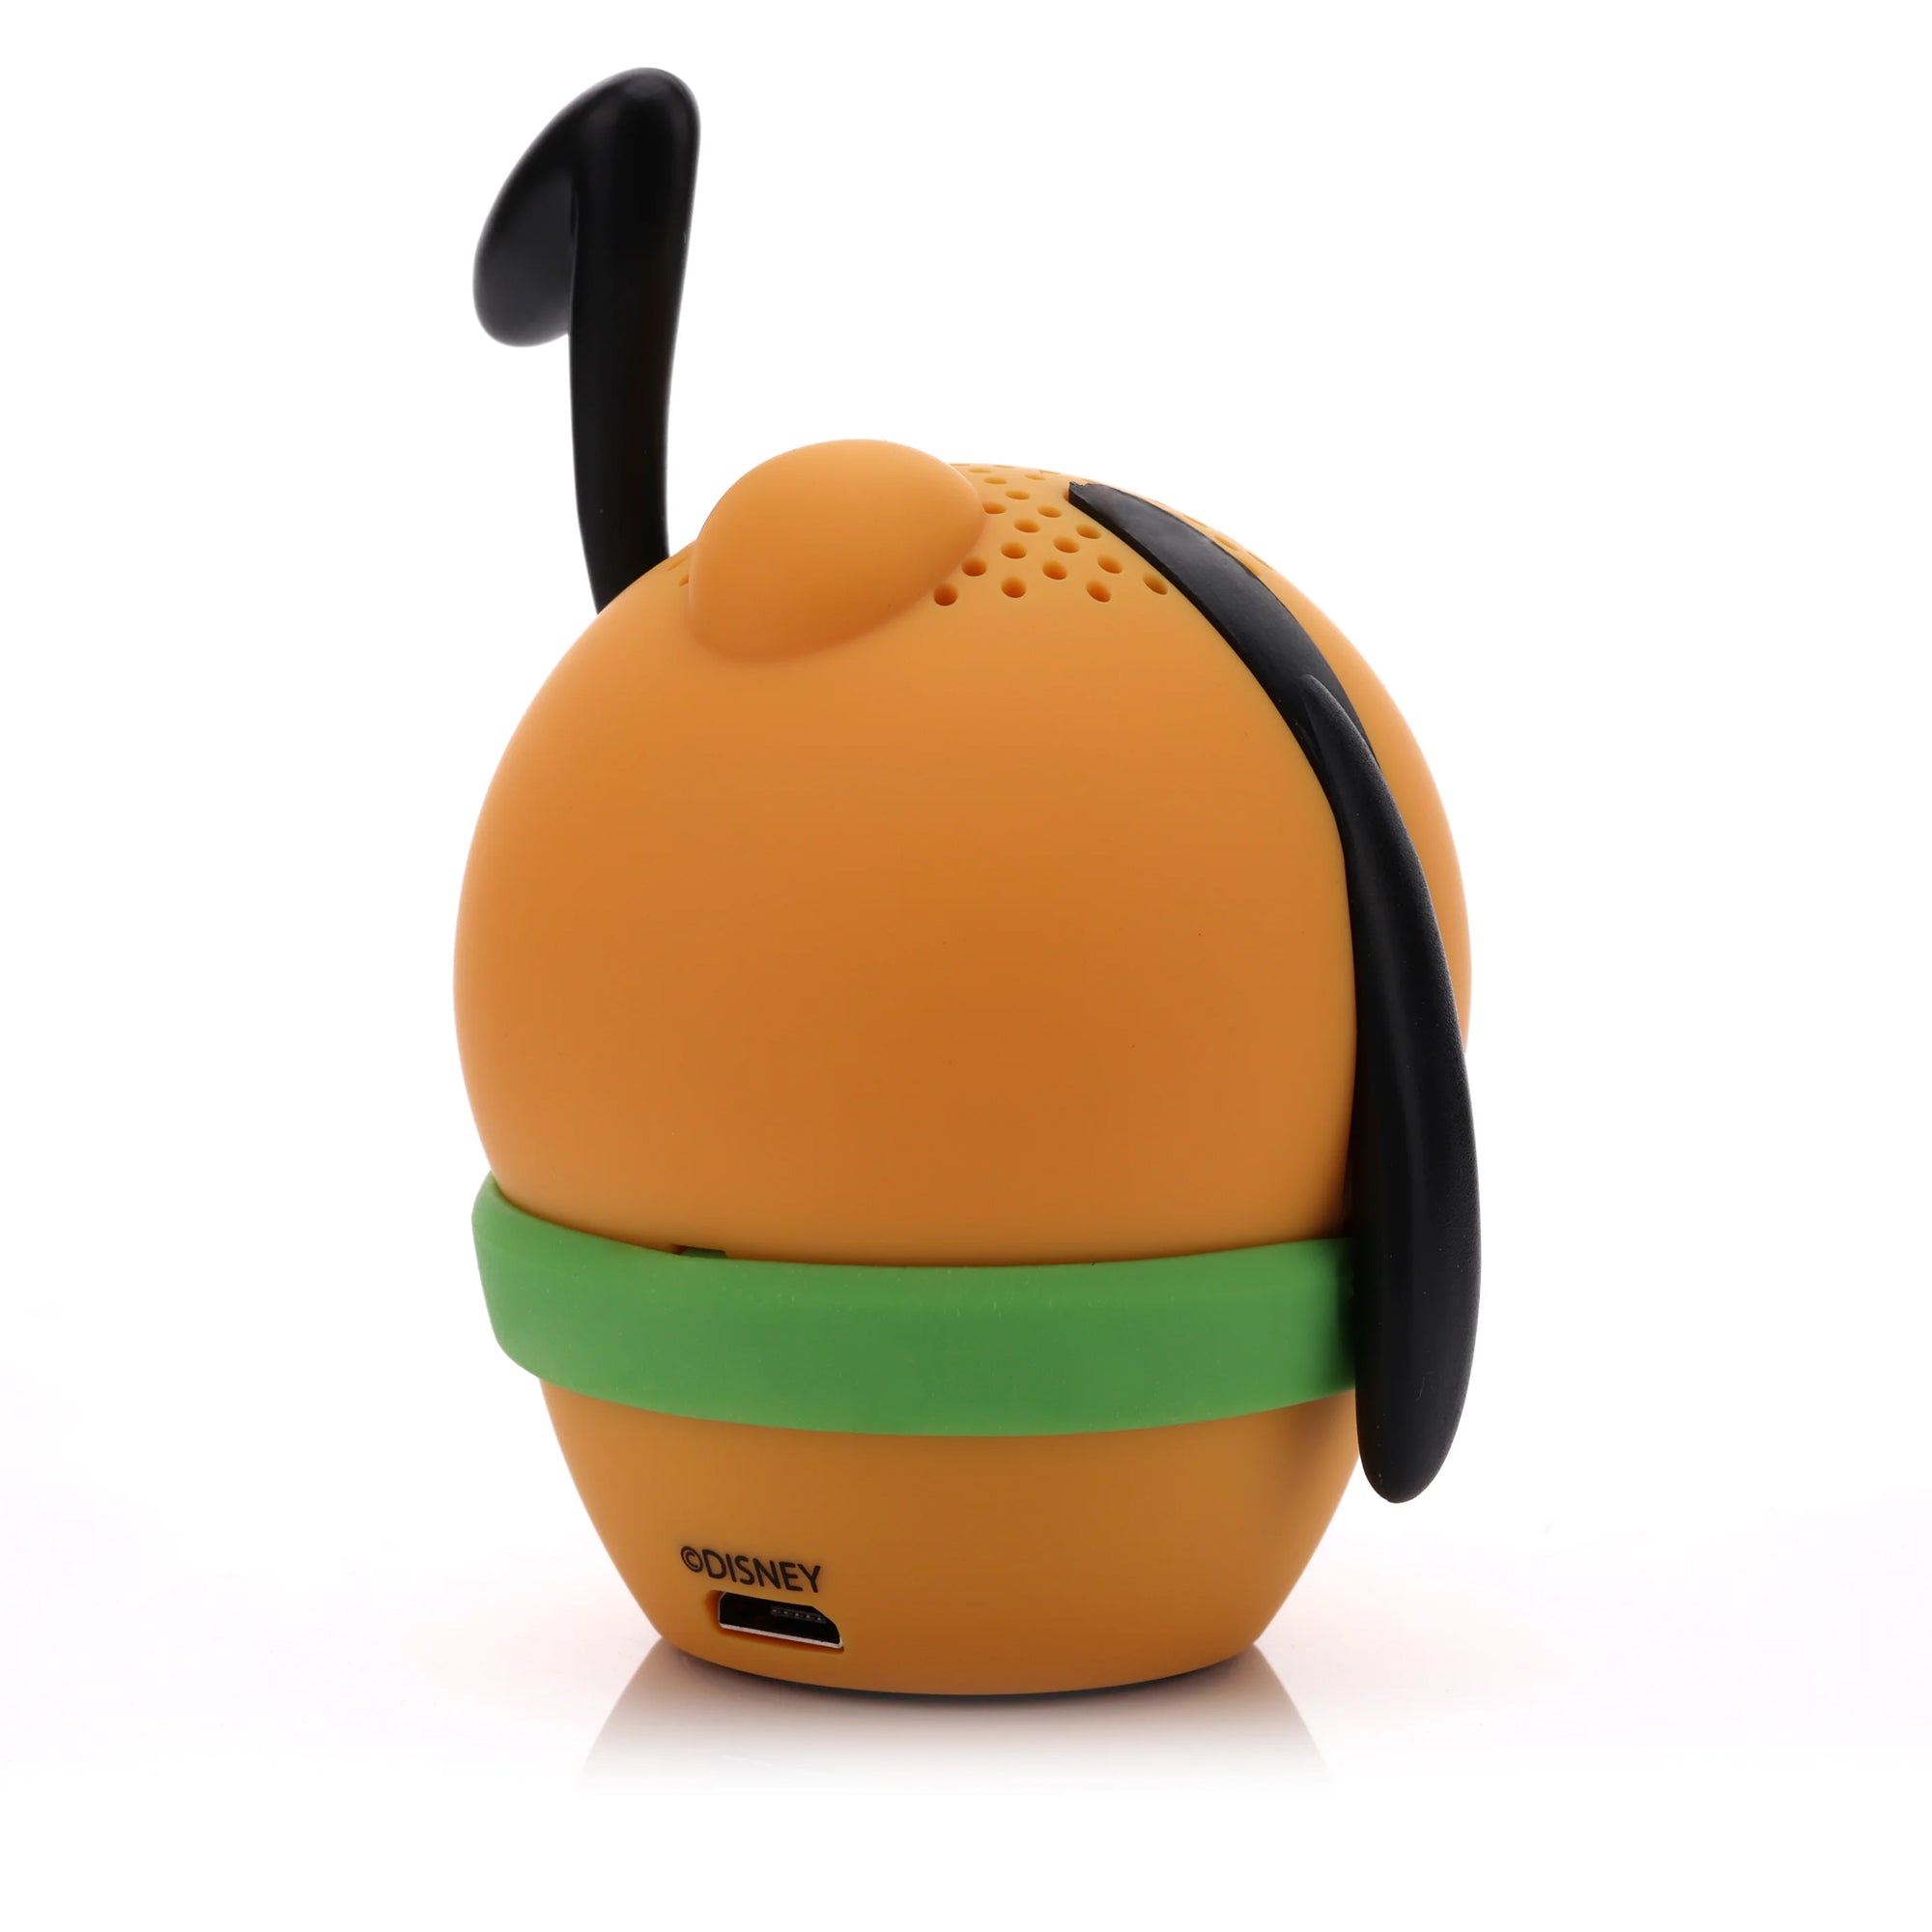 Disney Sensational Six Pluto Wireless Bluetooth Speaker